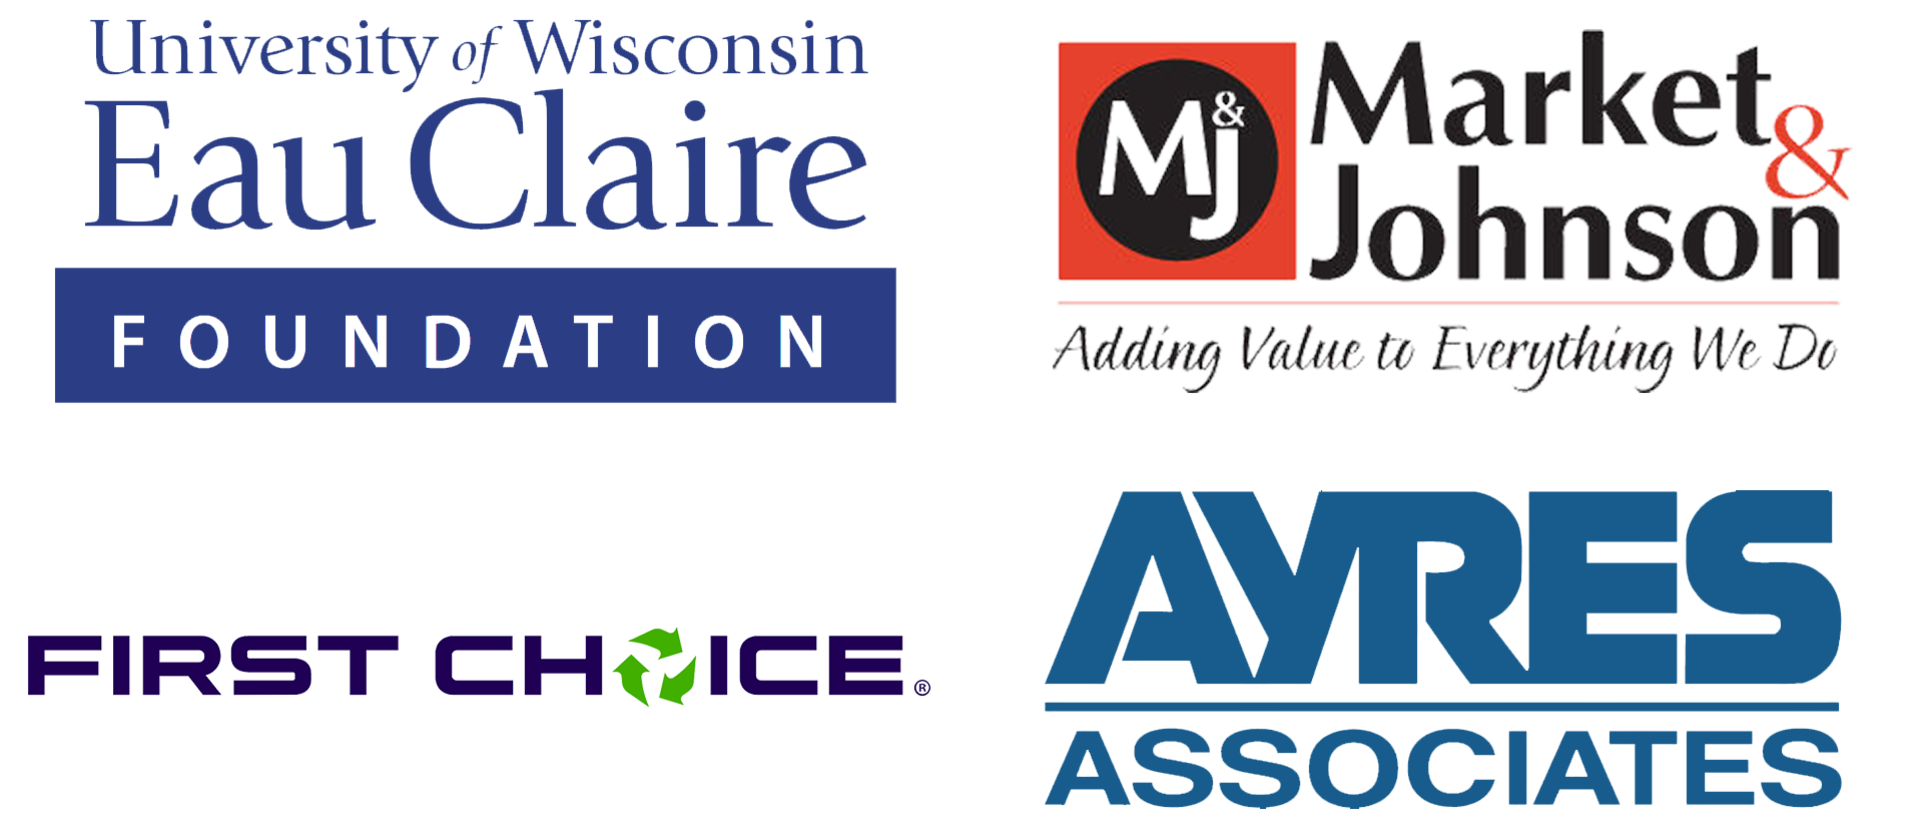 Market-Johnson logo, Ayres Associates logo, First Choice logo, UW-Eau Claire Foundation logo